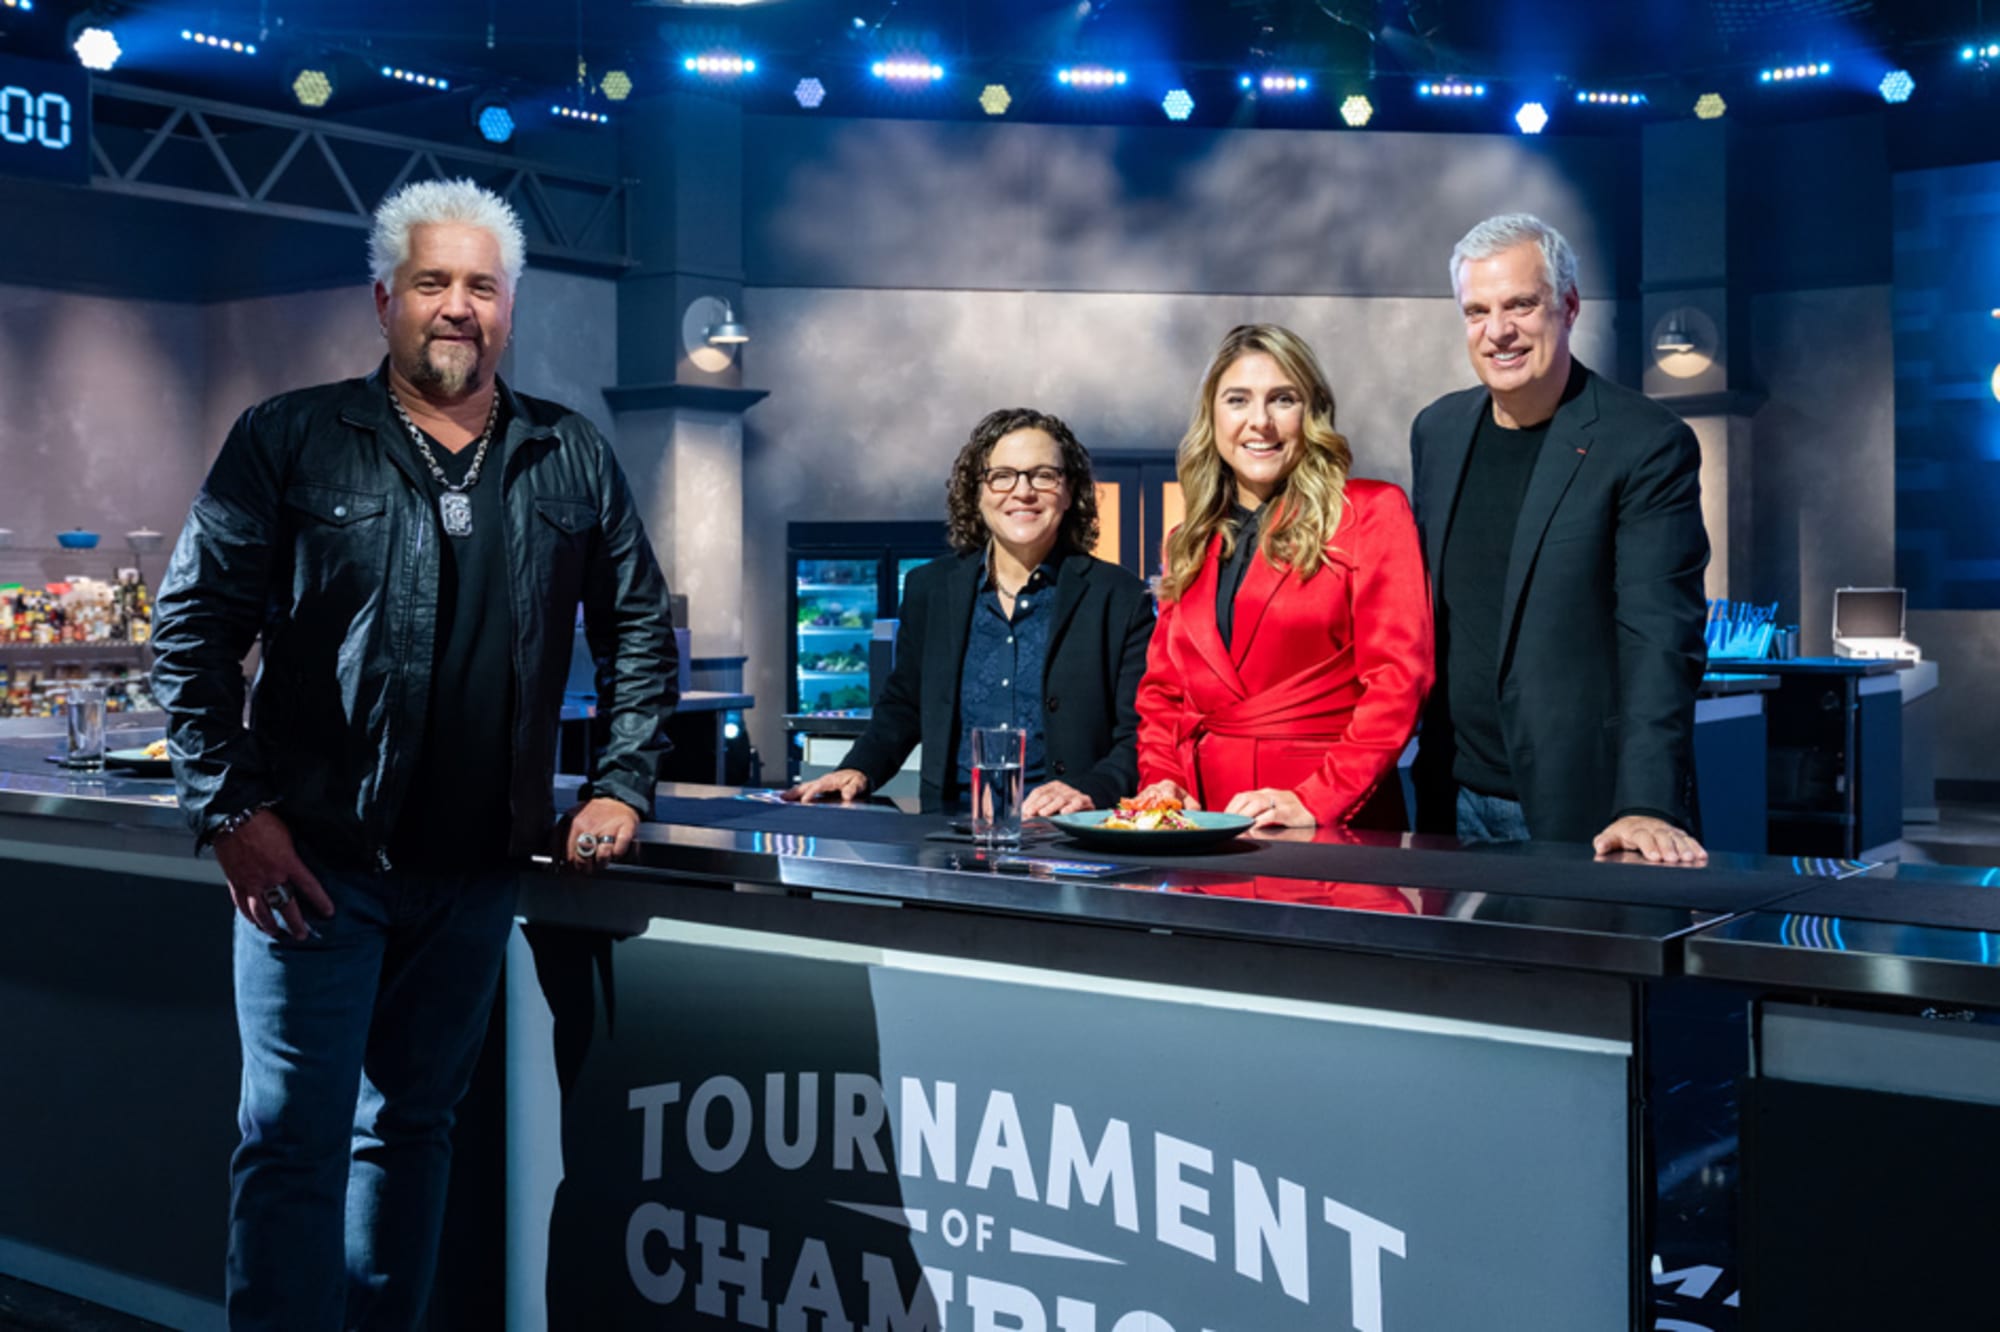 Tournament of Champions 3 episode 3 recap: Let the upsets begin